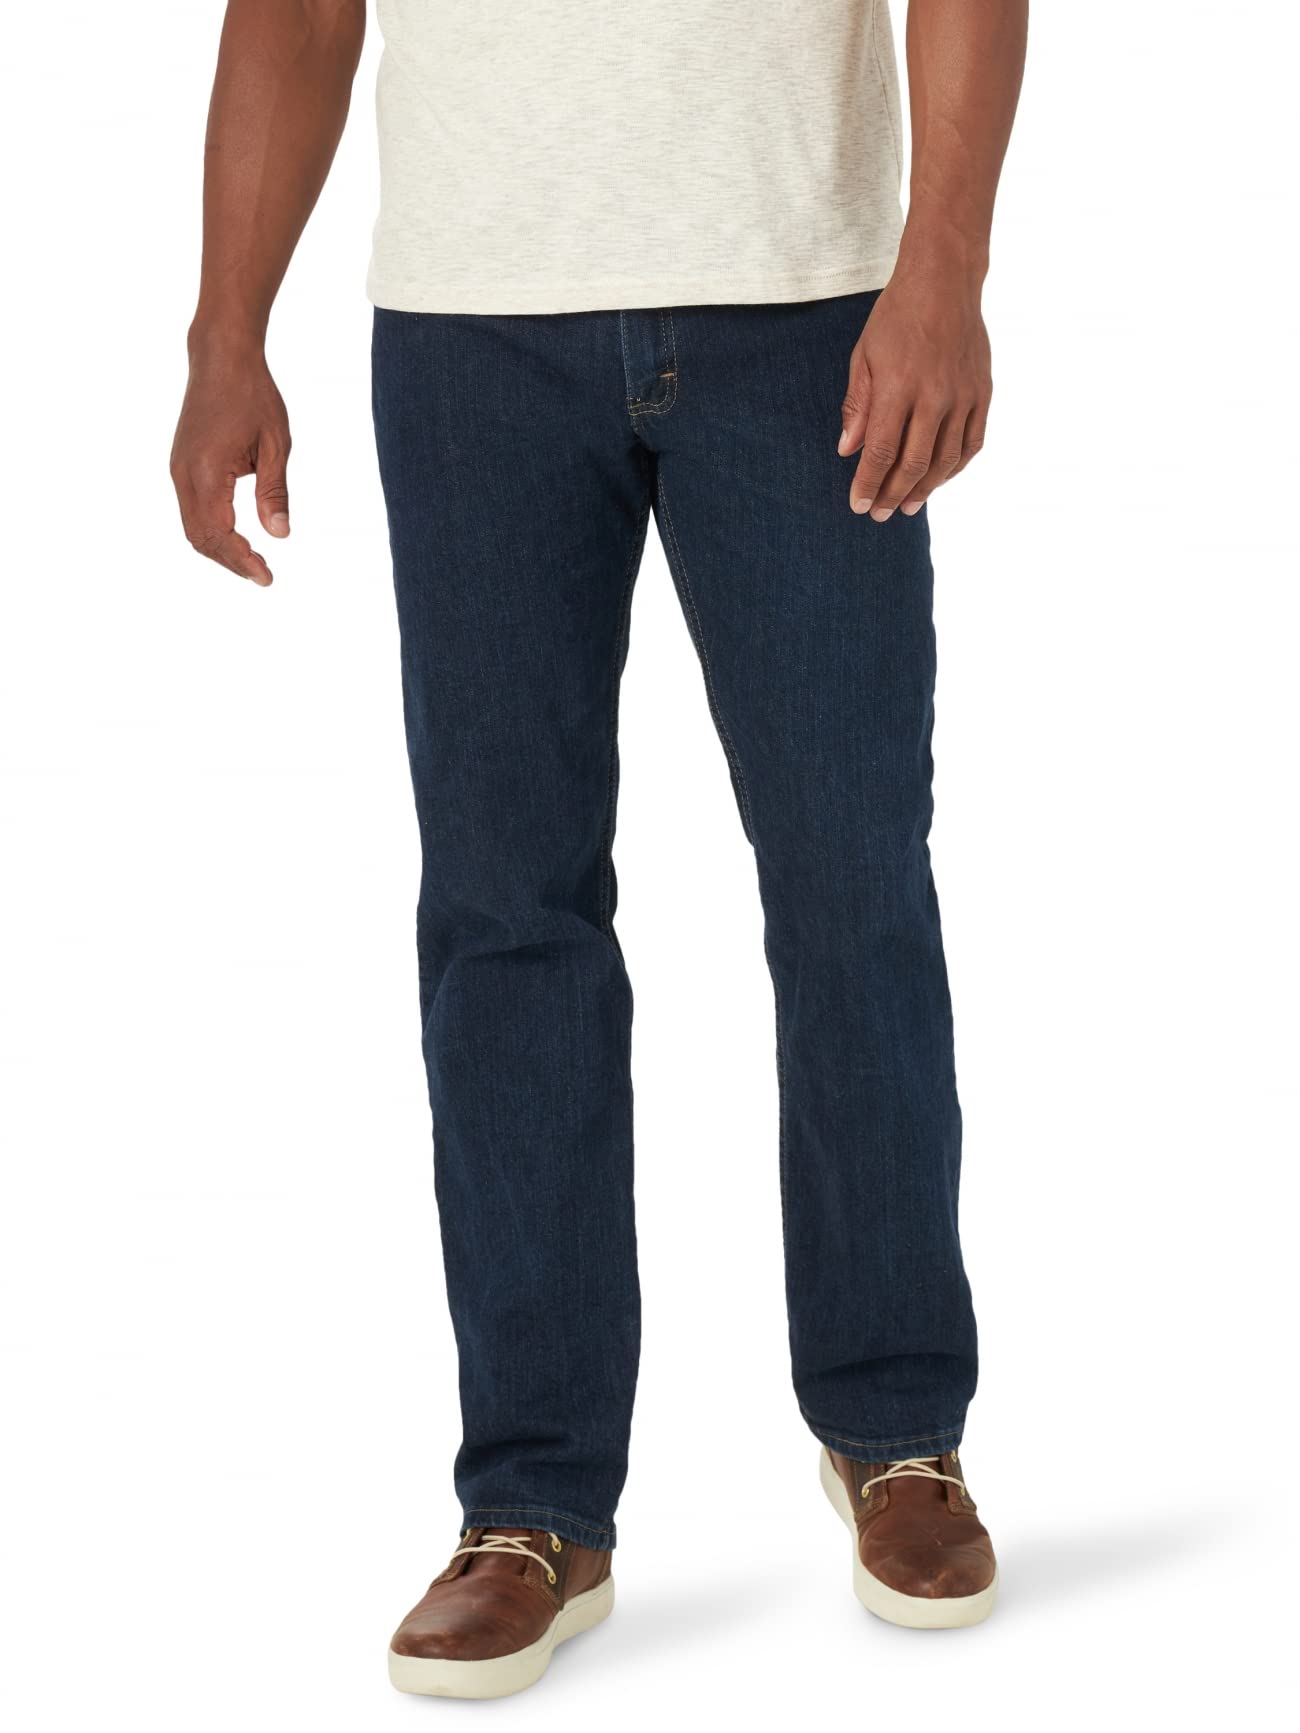 Wrangler Authentics Men's Regular Fit Comfort Flex Waist Jean, Dark Indigo, 42W x 30L